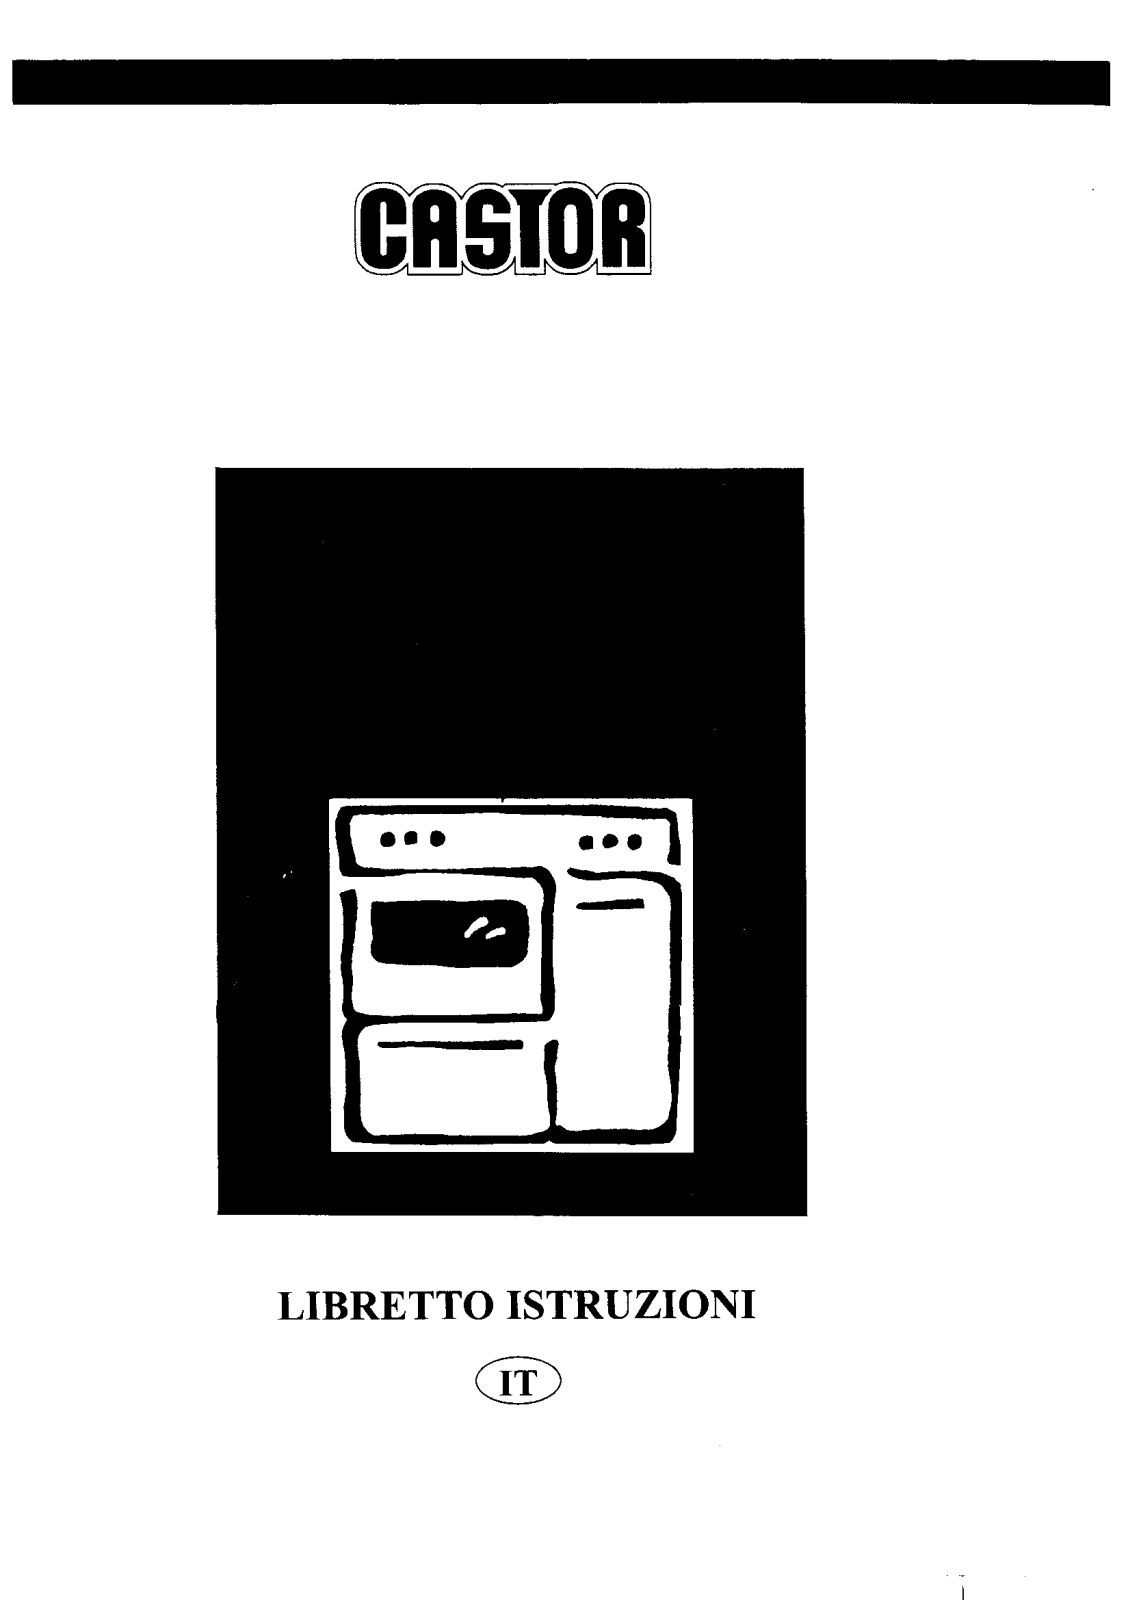 Castor C841SA, C8, CB80 User Manual